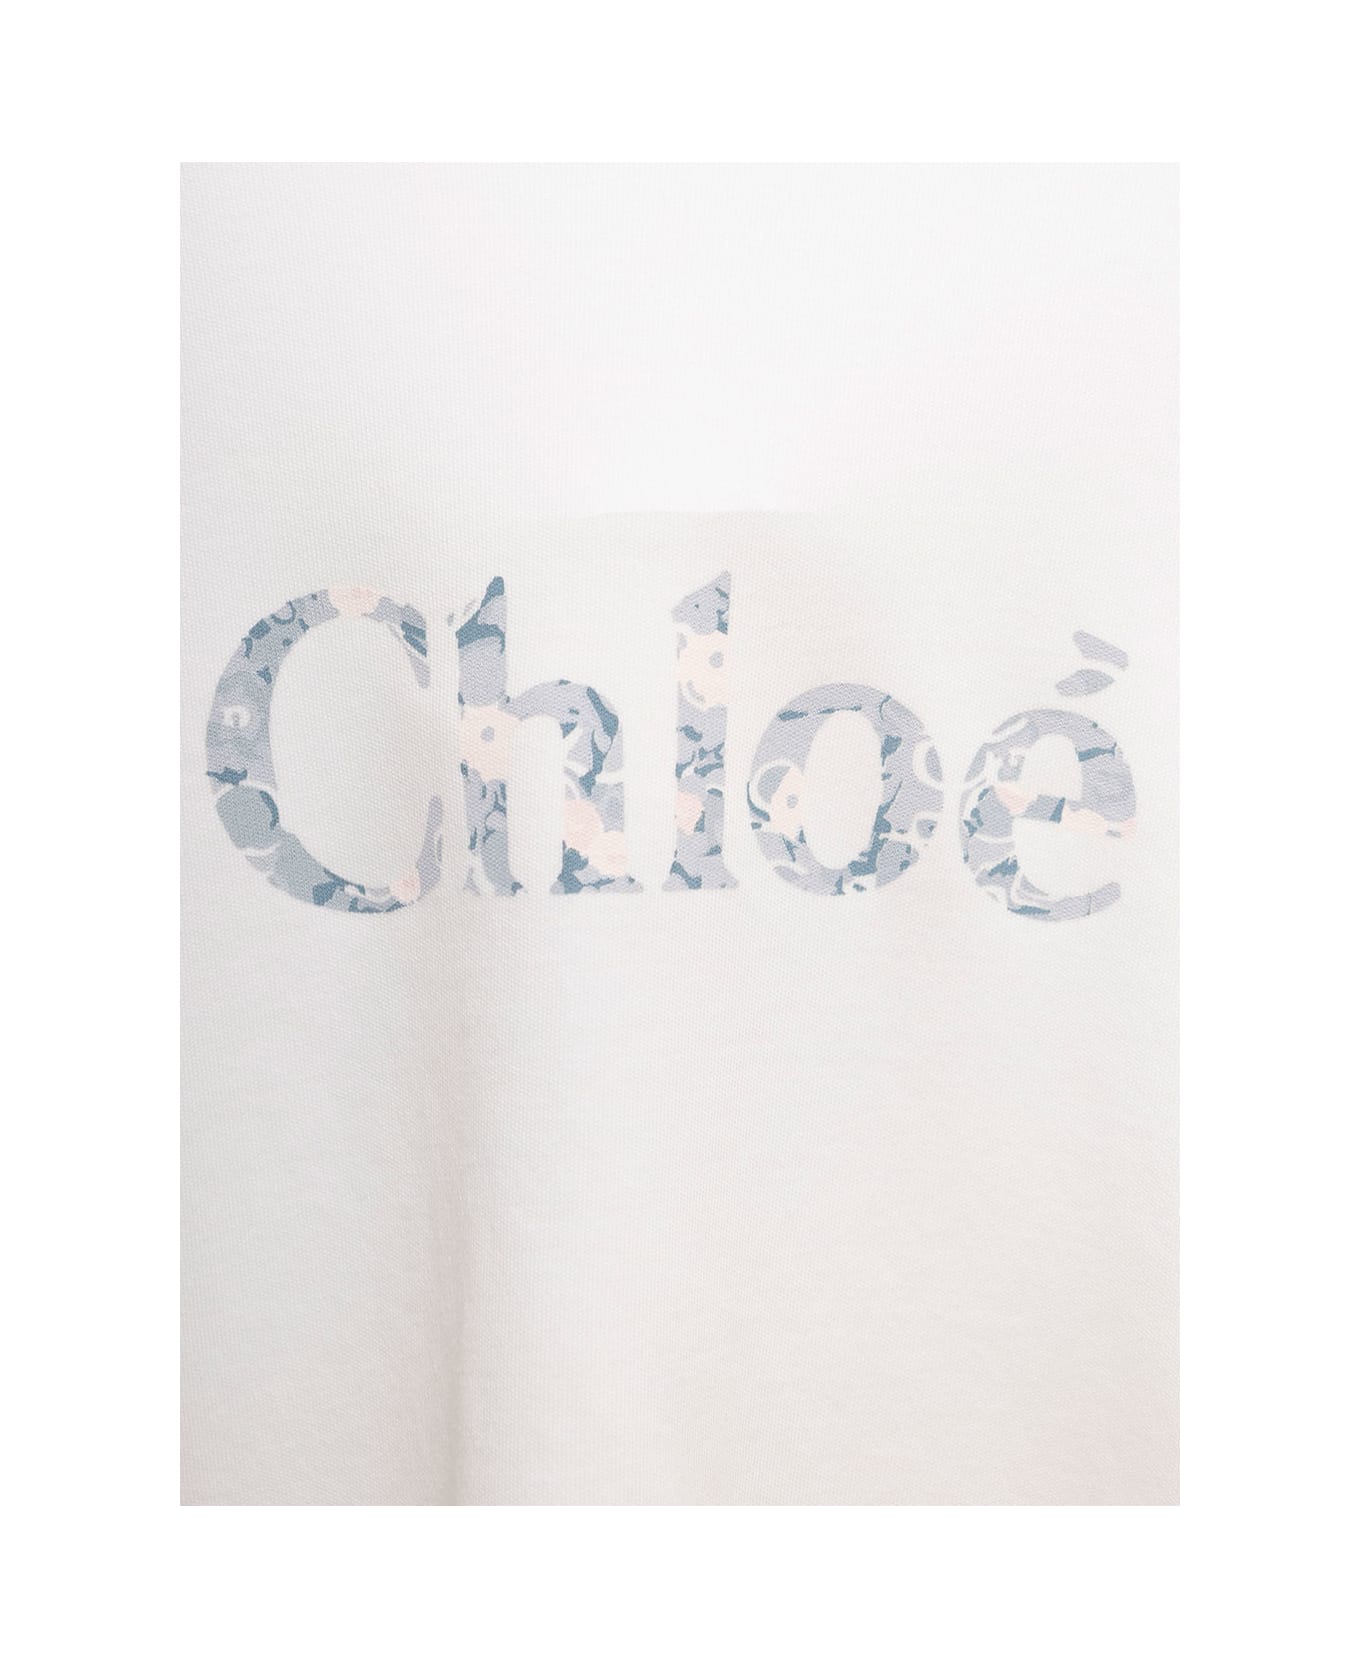 Chloé White Cotton Long-sleeved T-shirt With Logo Chloé Kids Girl - White